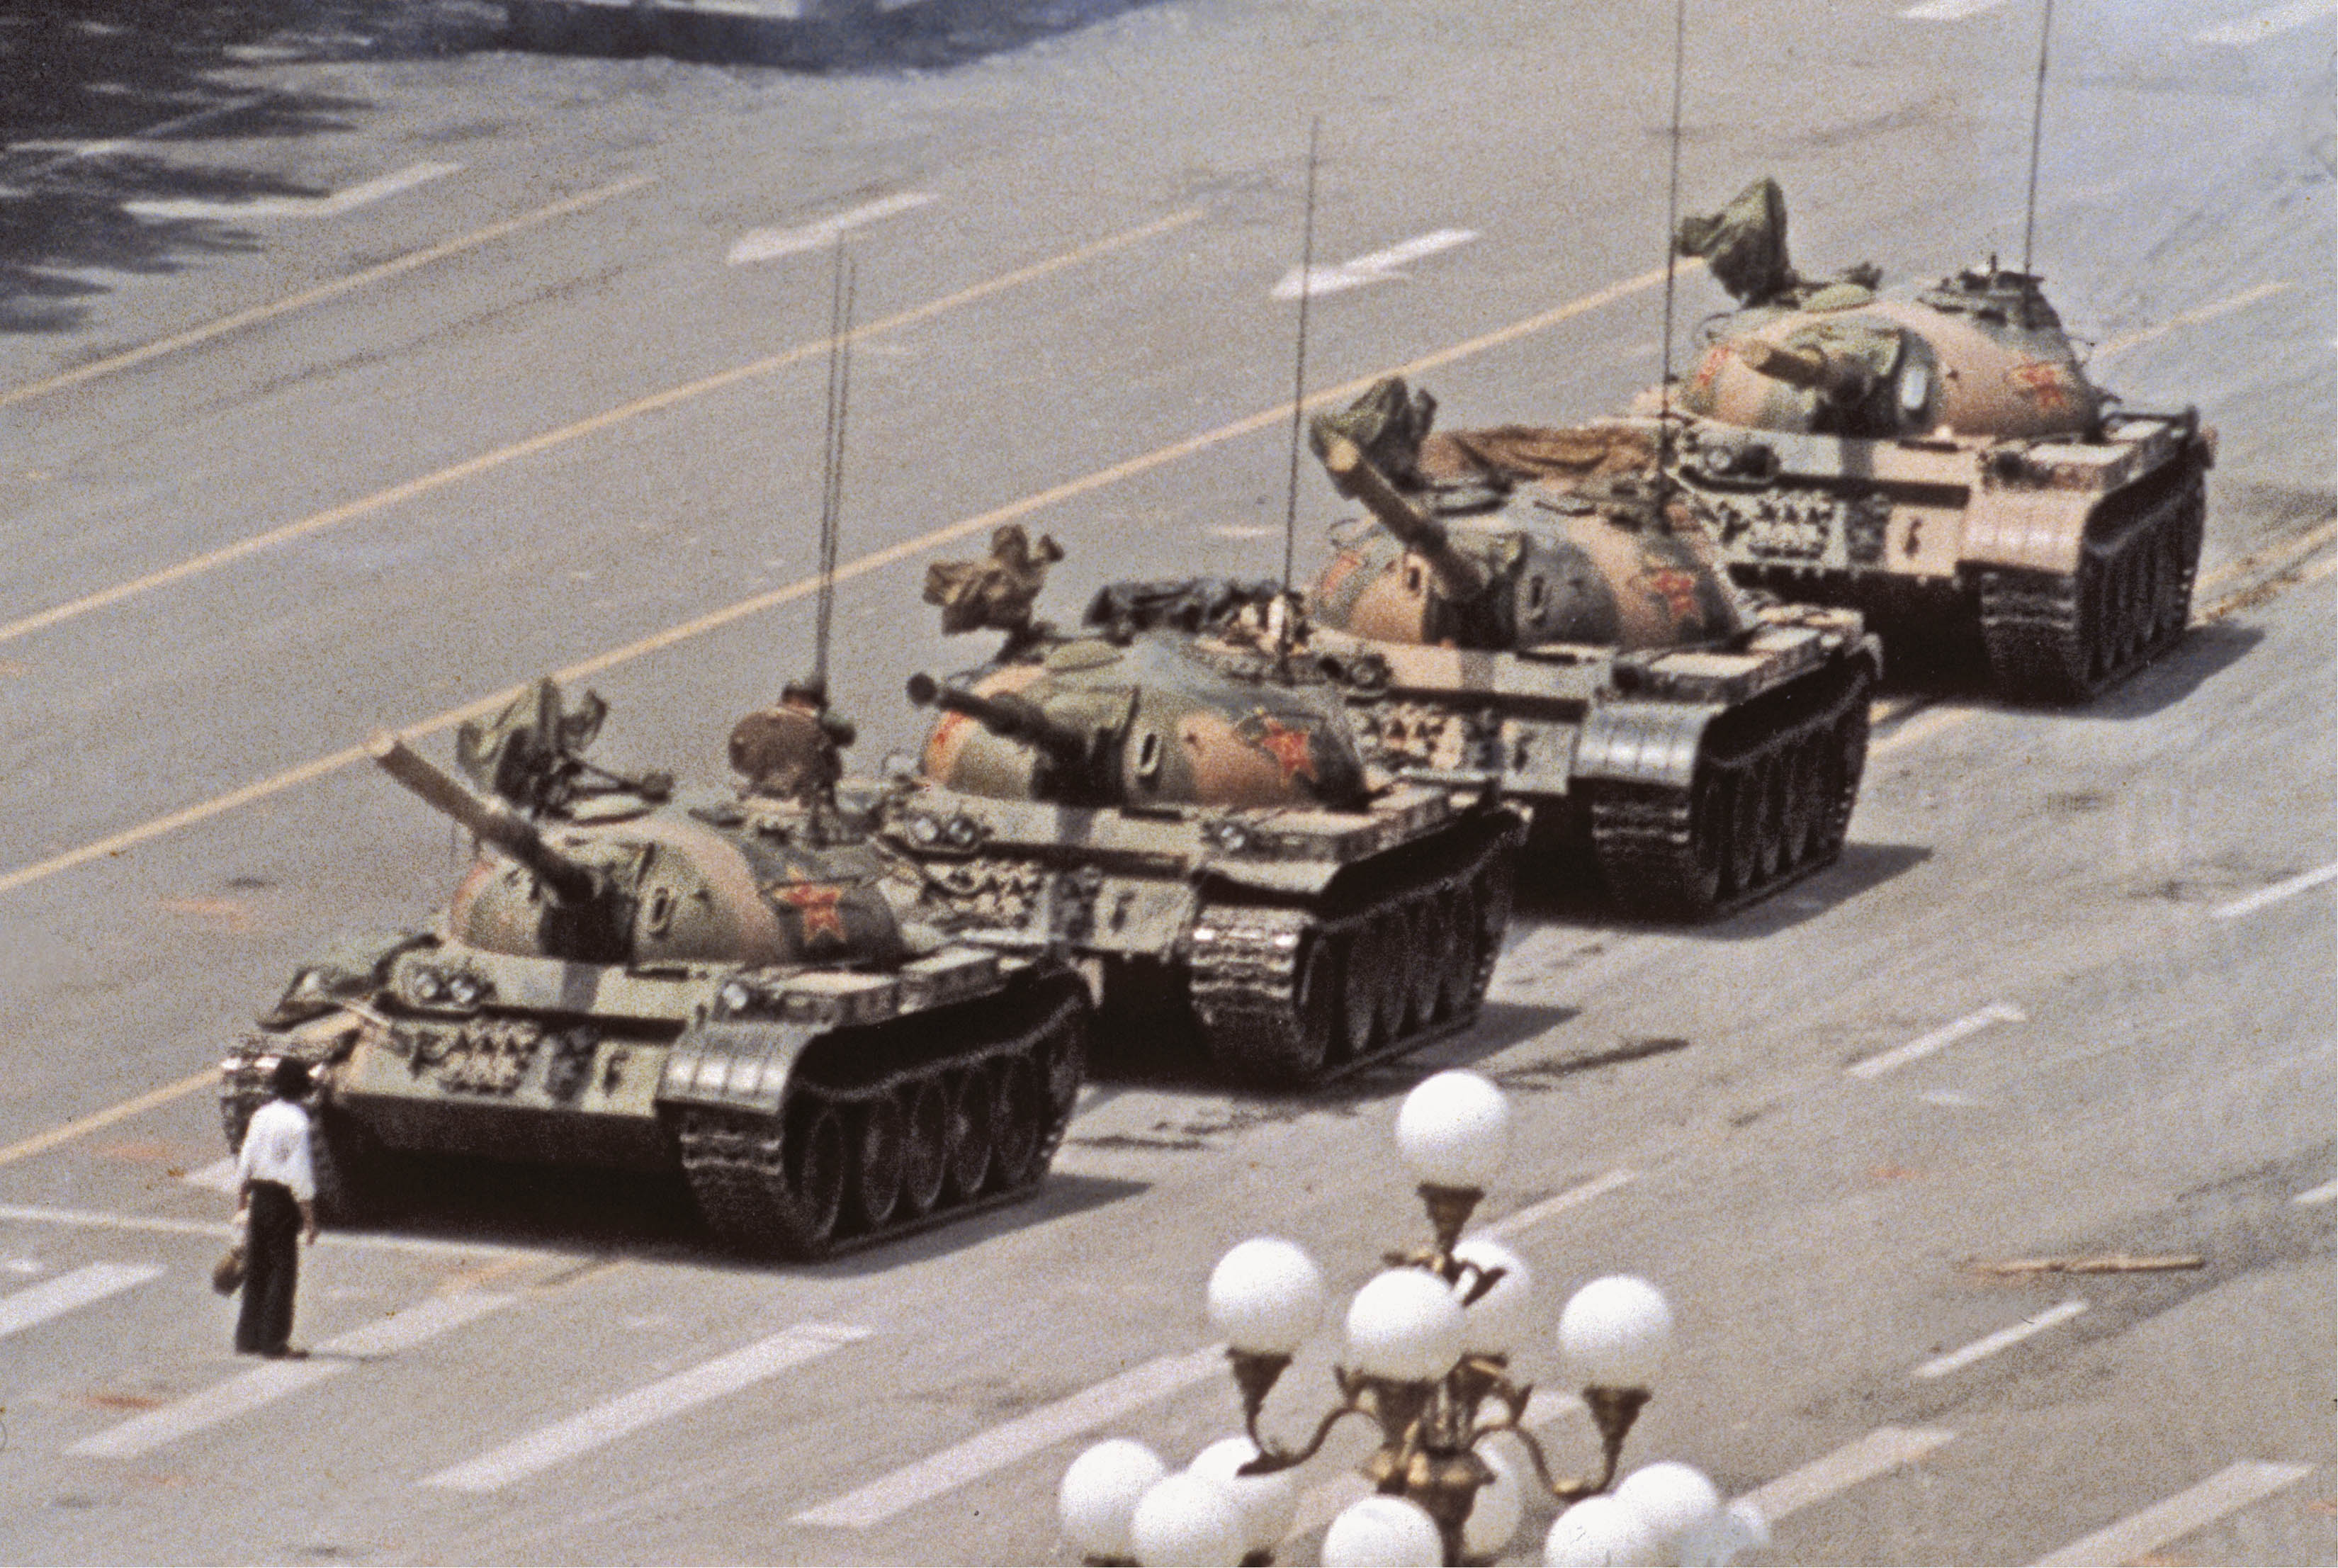 Tank Man, Tiananmen Square protests, Beijing, June 1989